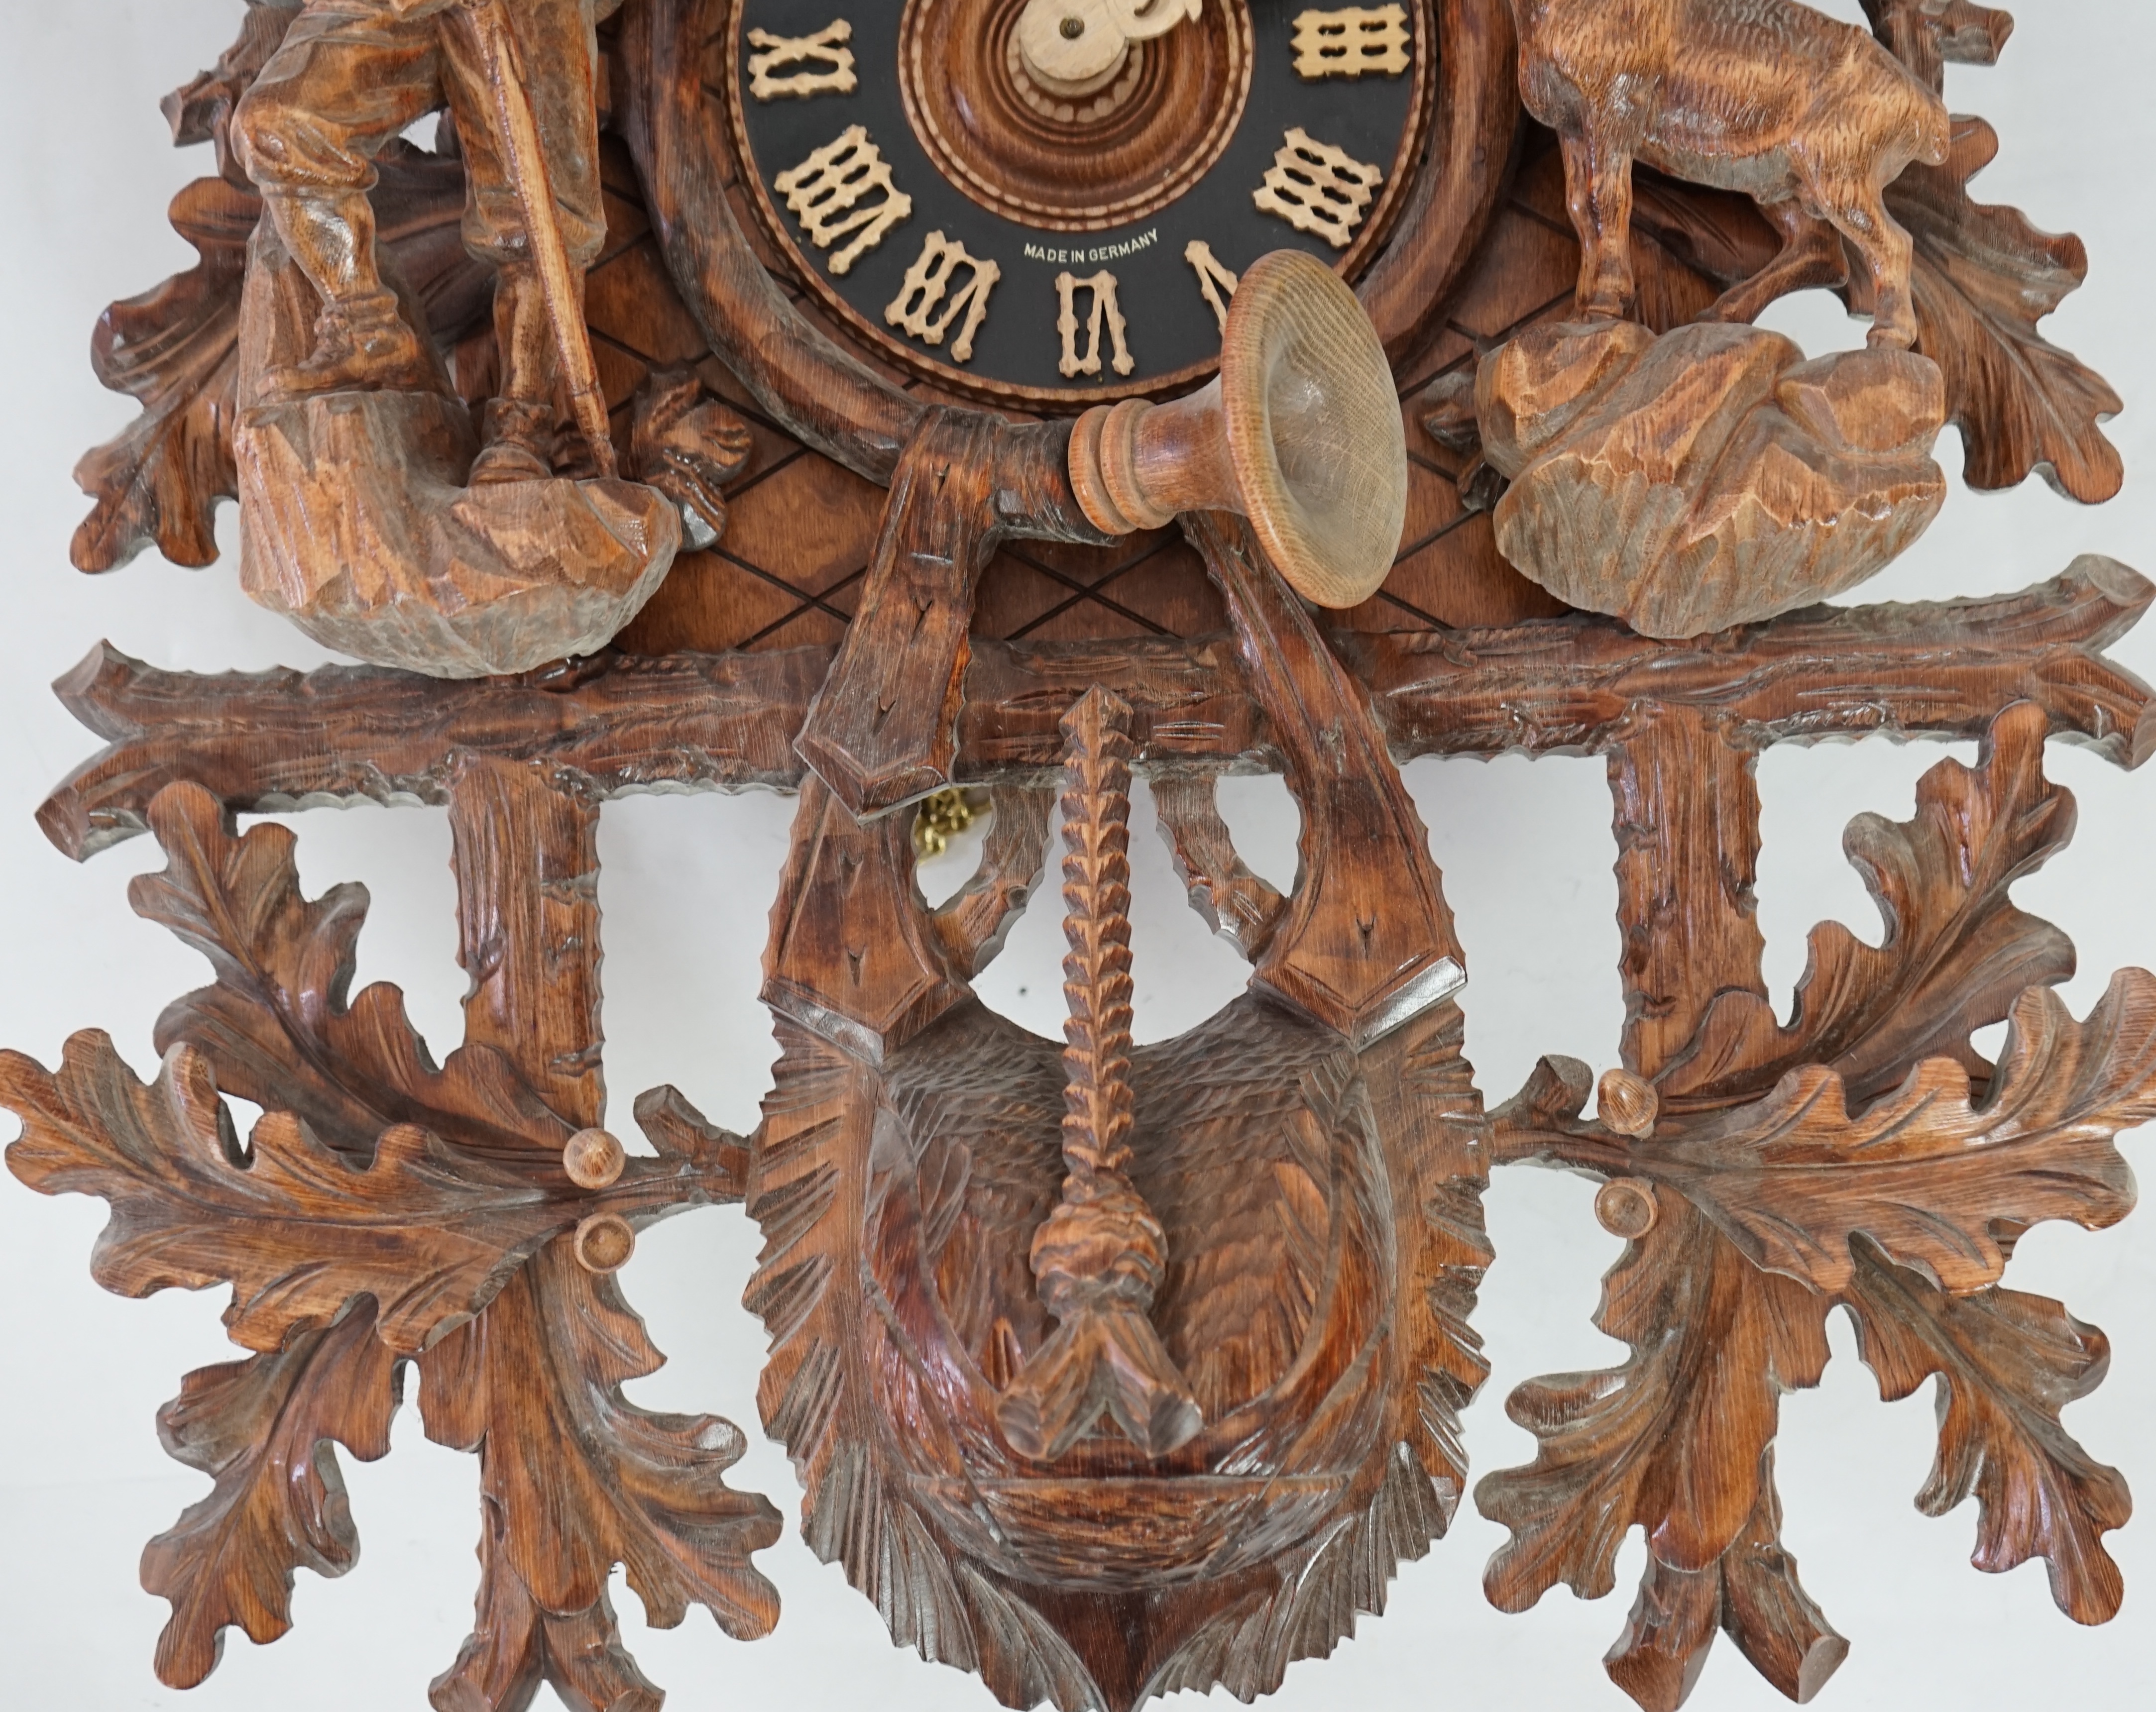 A Hönes Black Forest carved wood cuckoo clock